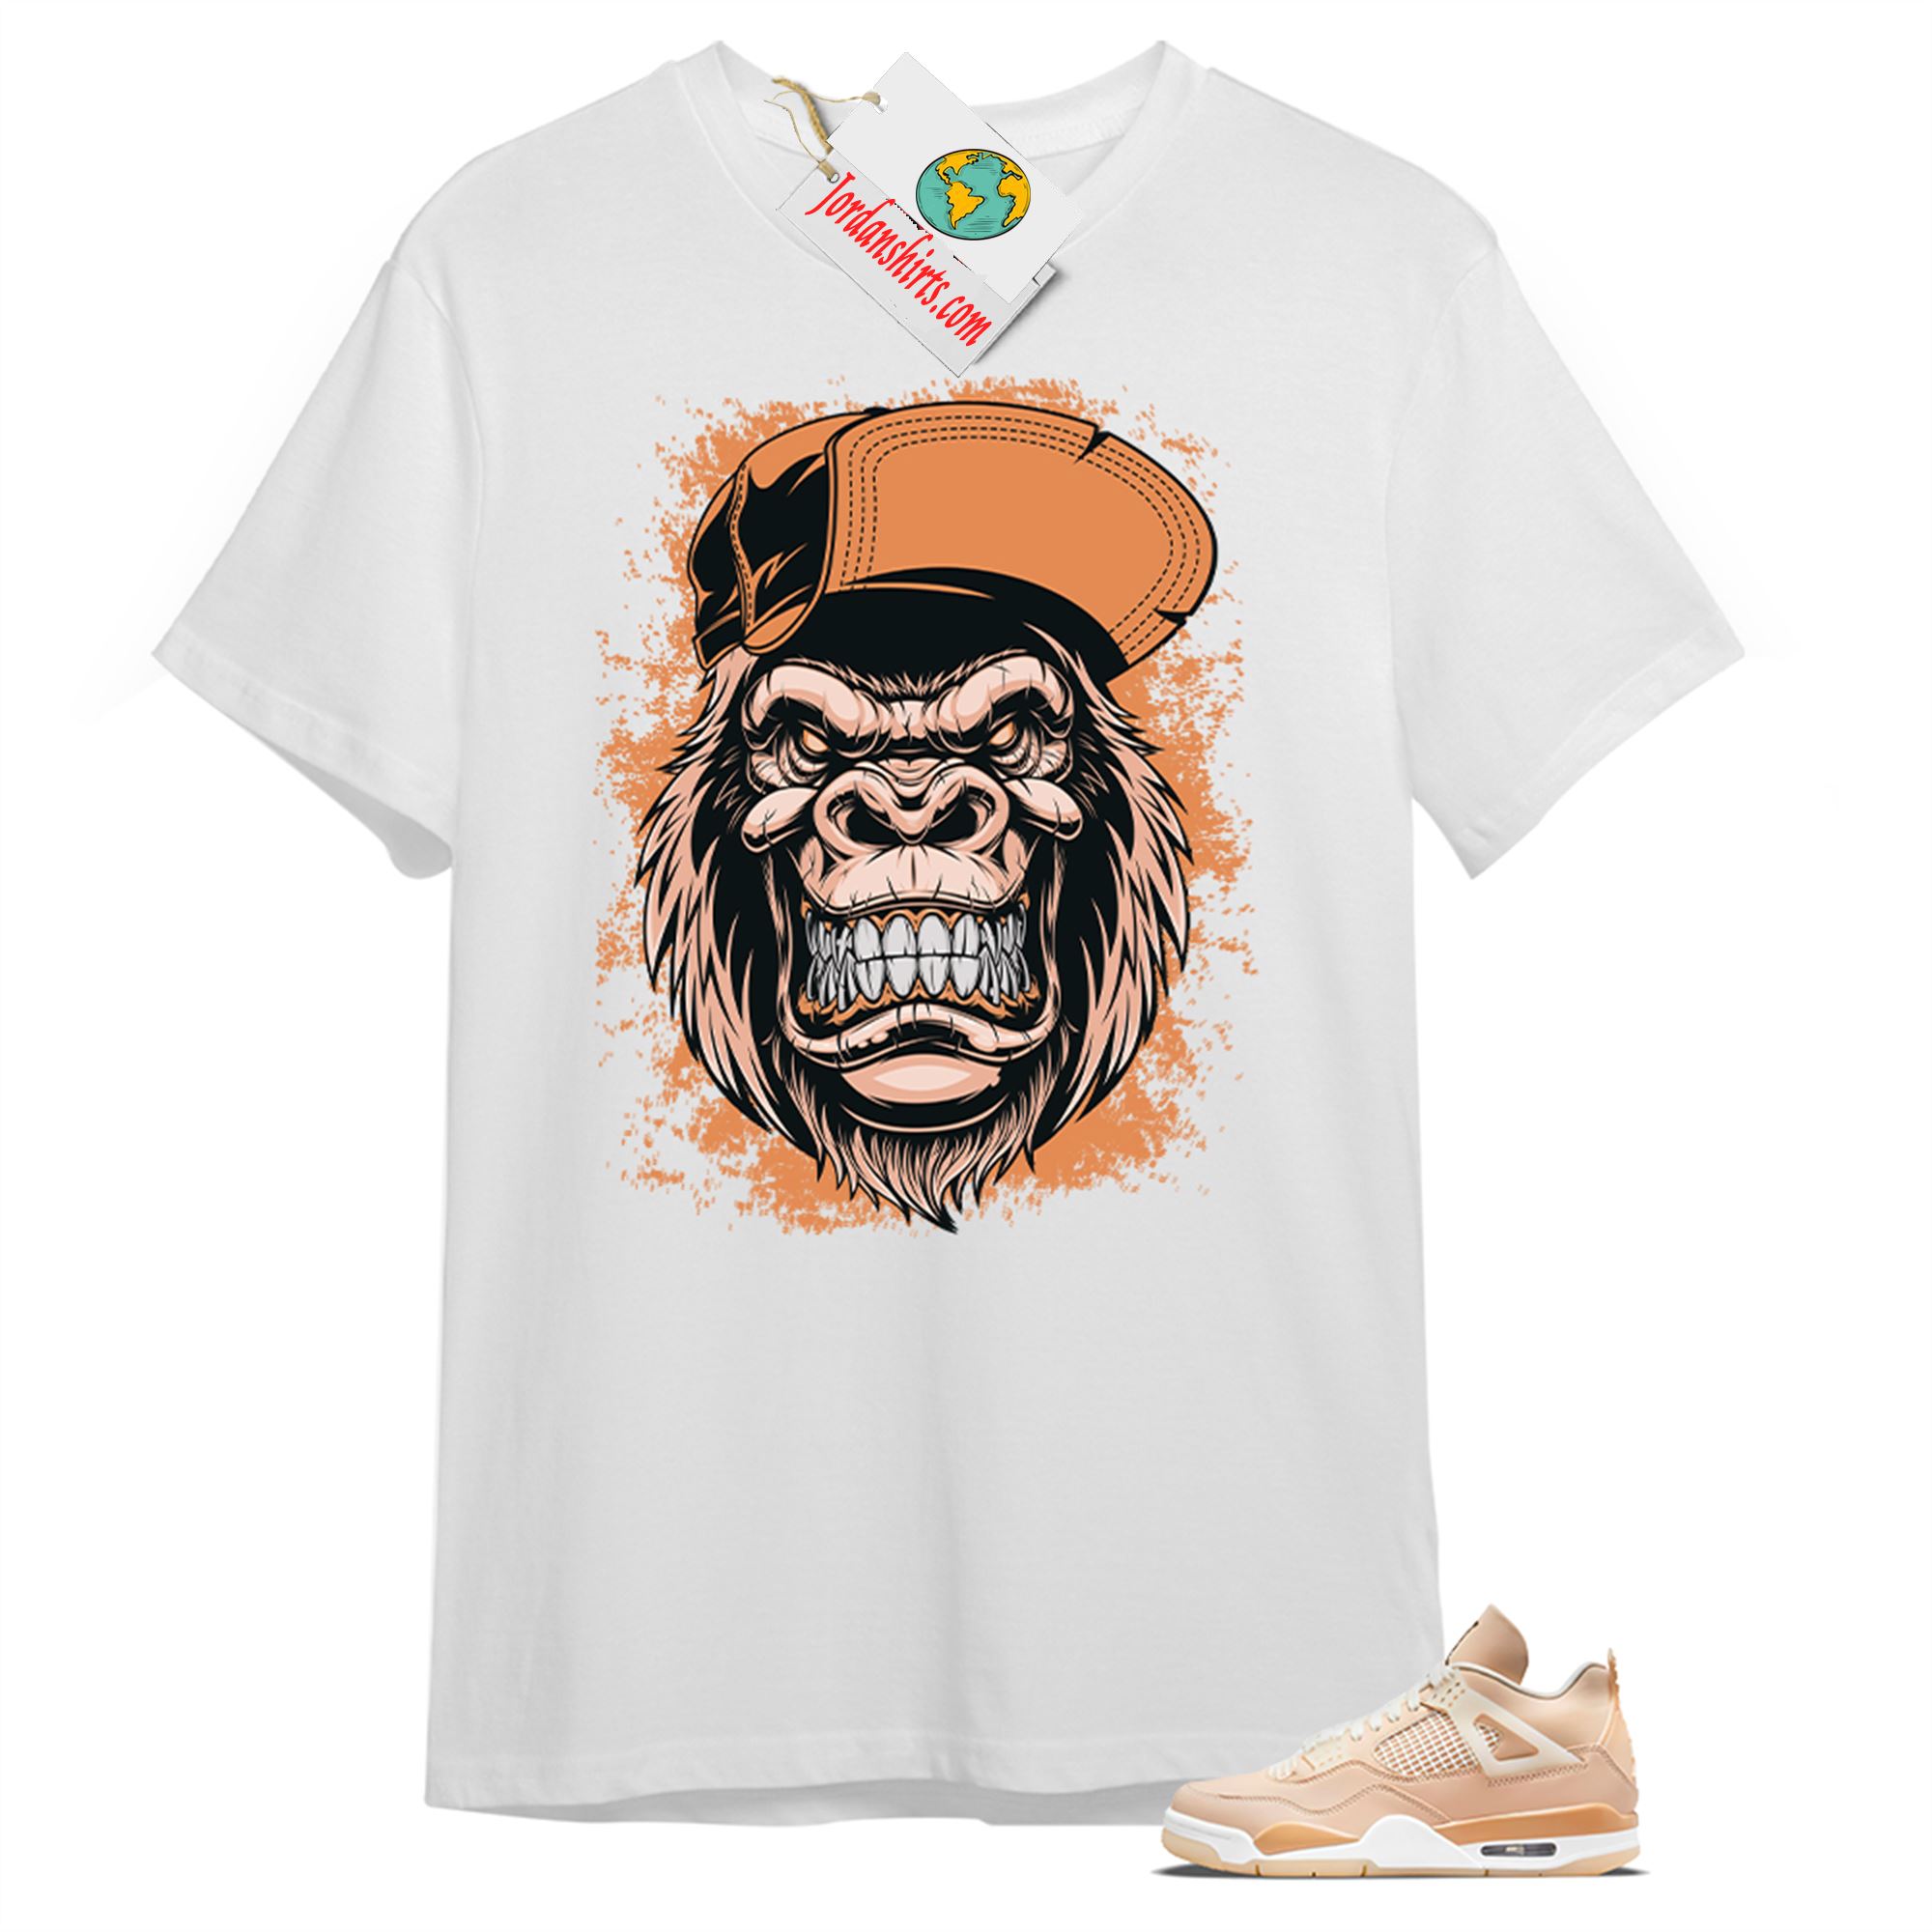 Jordan 4 Shirt, Ferocious Gorilla White T-shirt Air Jordan 4 Shimmer 4s Plus Size Up To 5xl